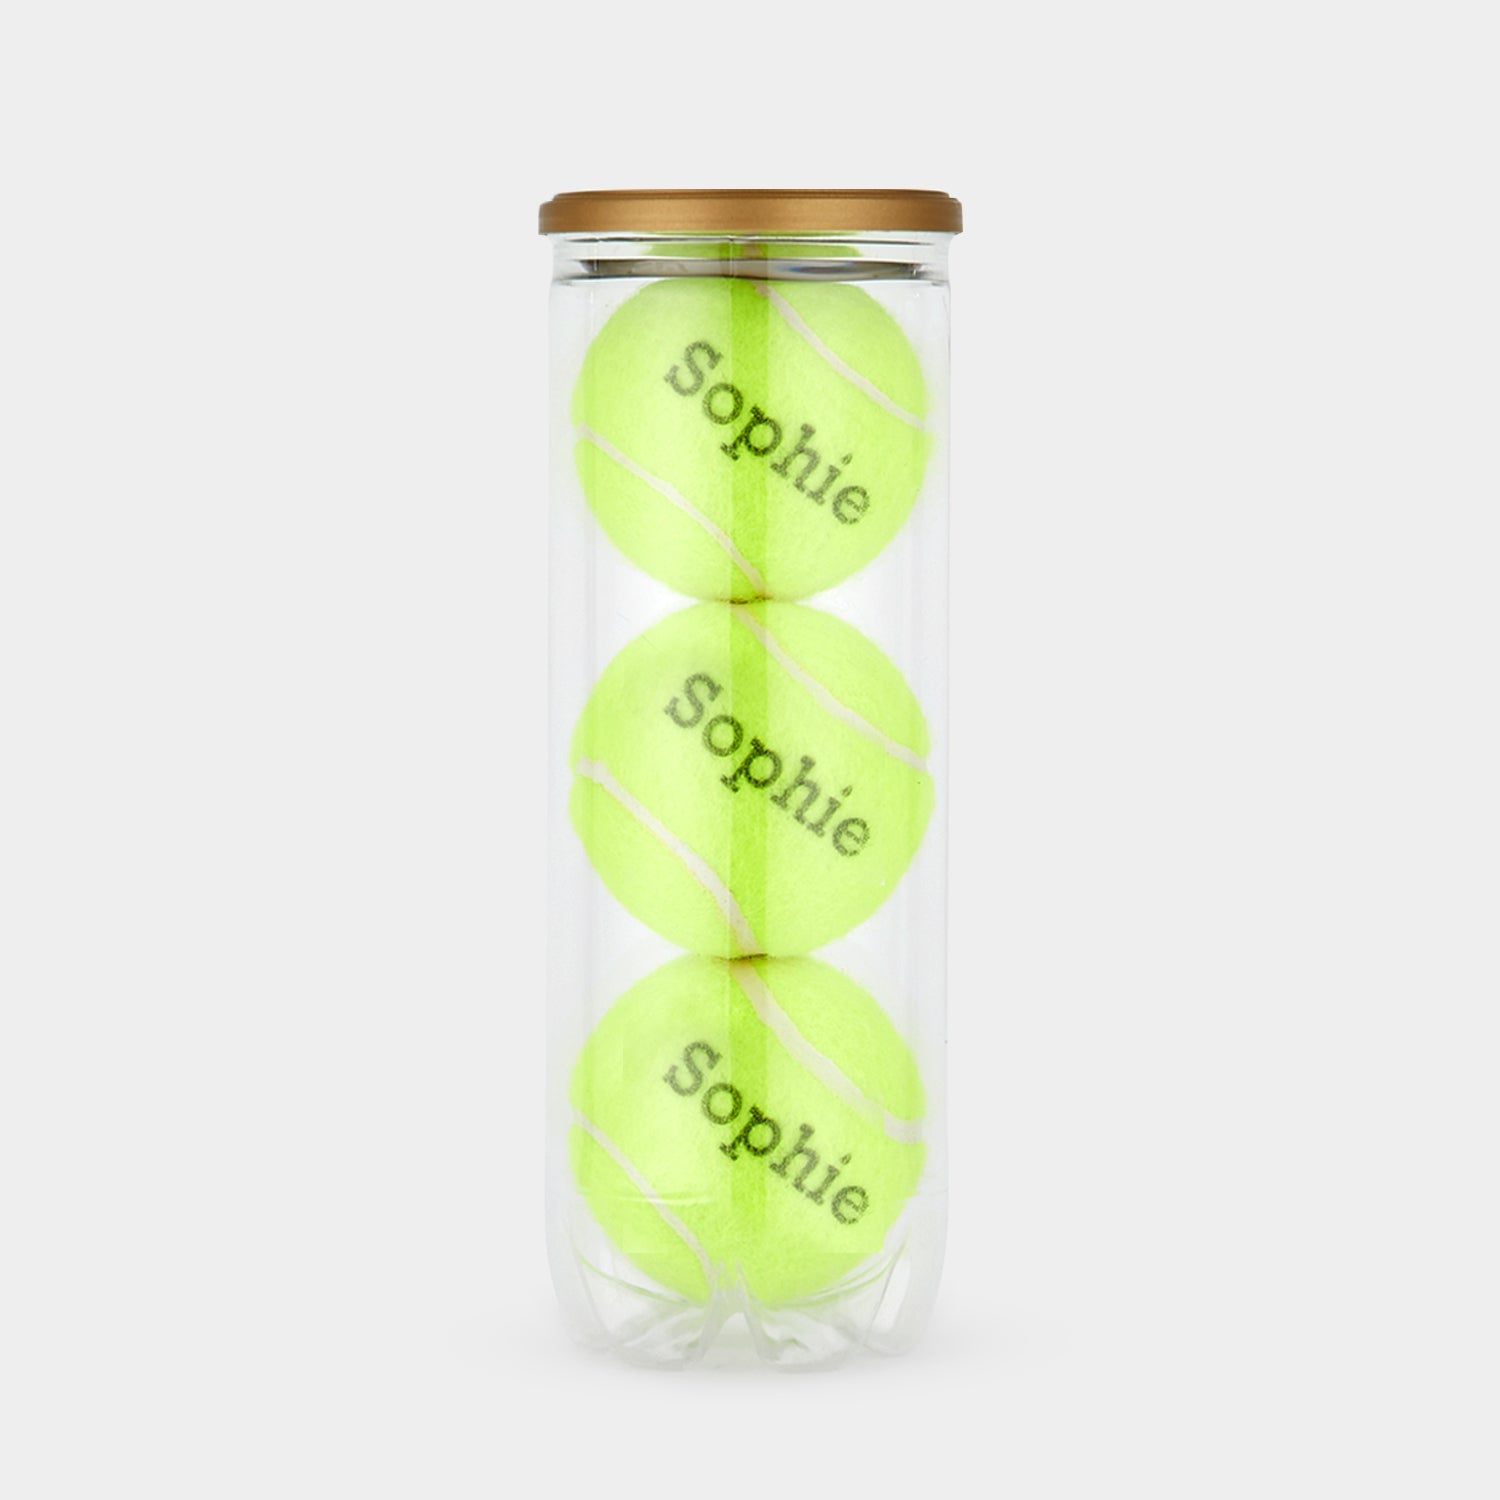 Bespoke Tennis Balls -

                  
                    Felt in Yellow -
                  

                  Anya Hindmarch EU
